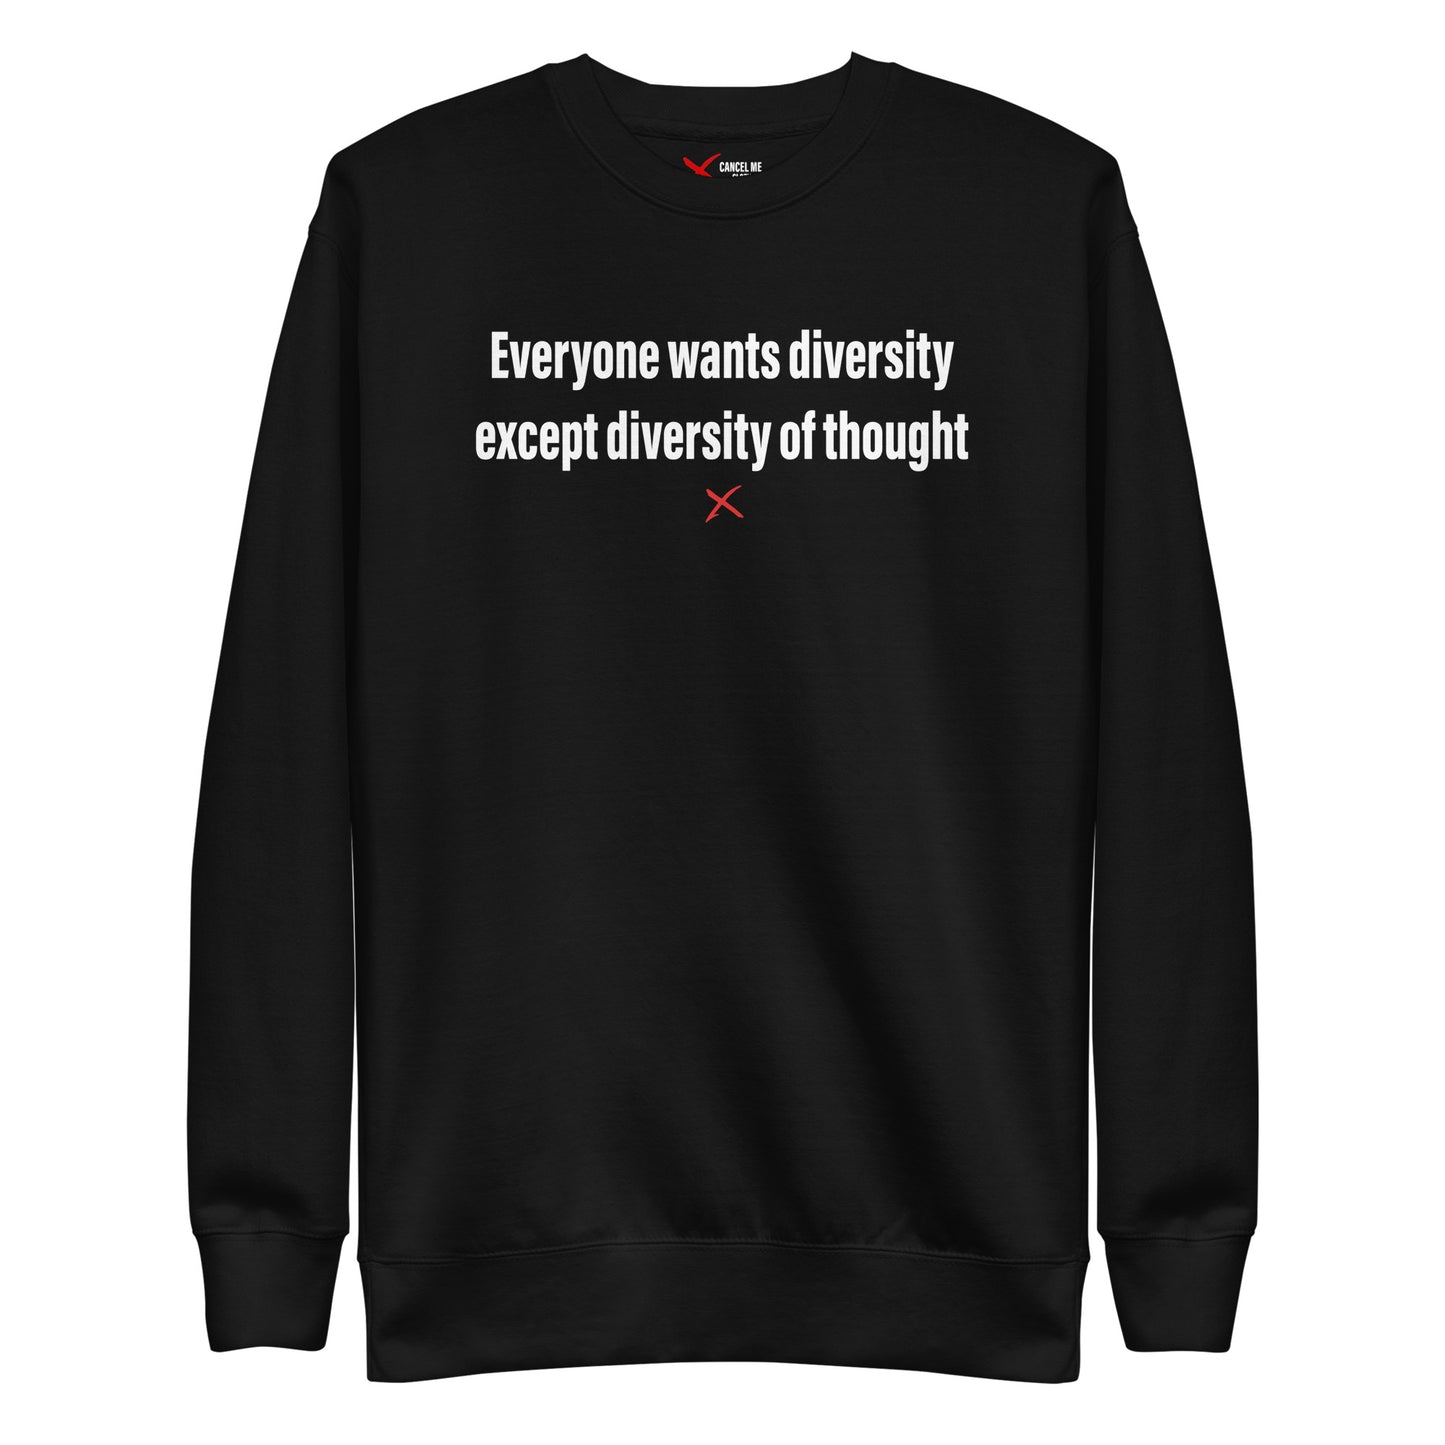 Everyone wants diversity except diversity of thought - Sweatshirt